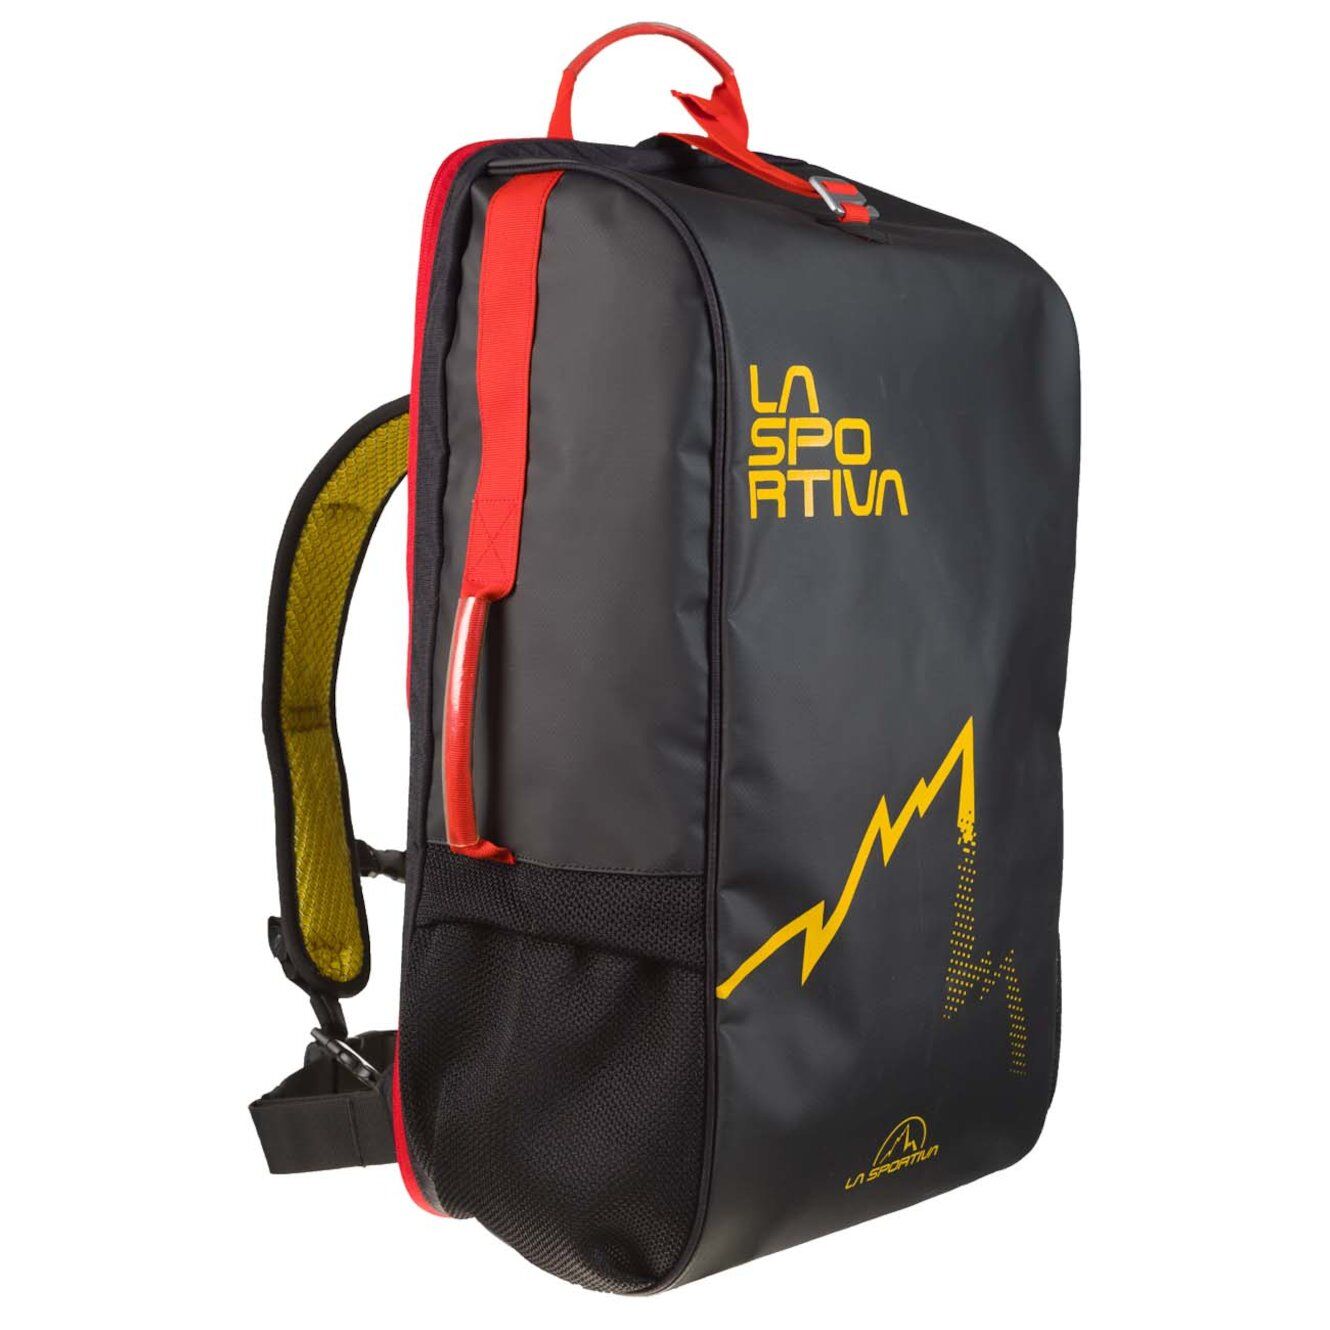 La Sportiva Travel Bag - Touring rygsæk